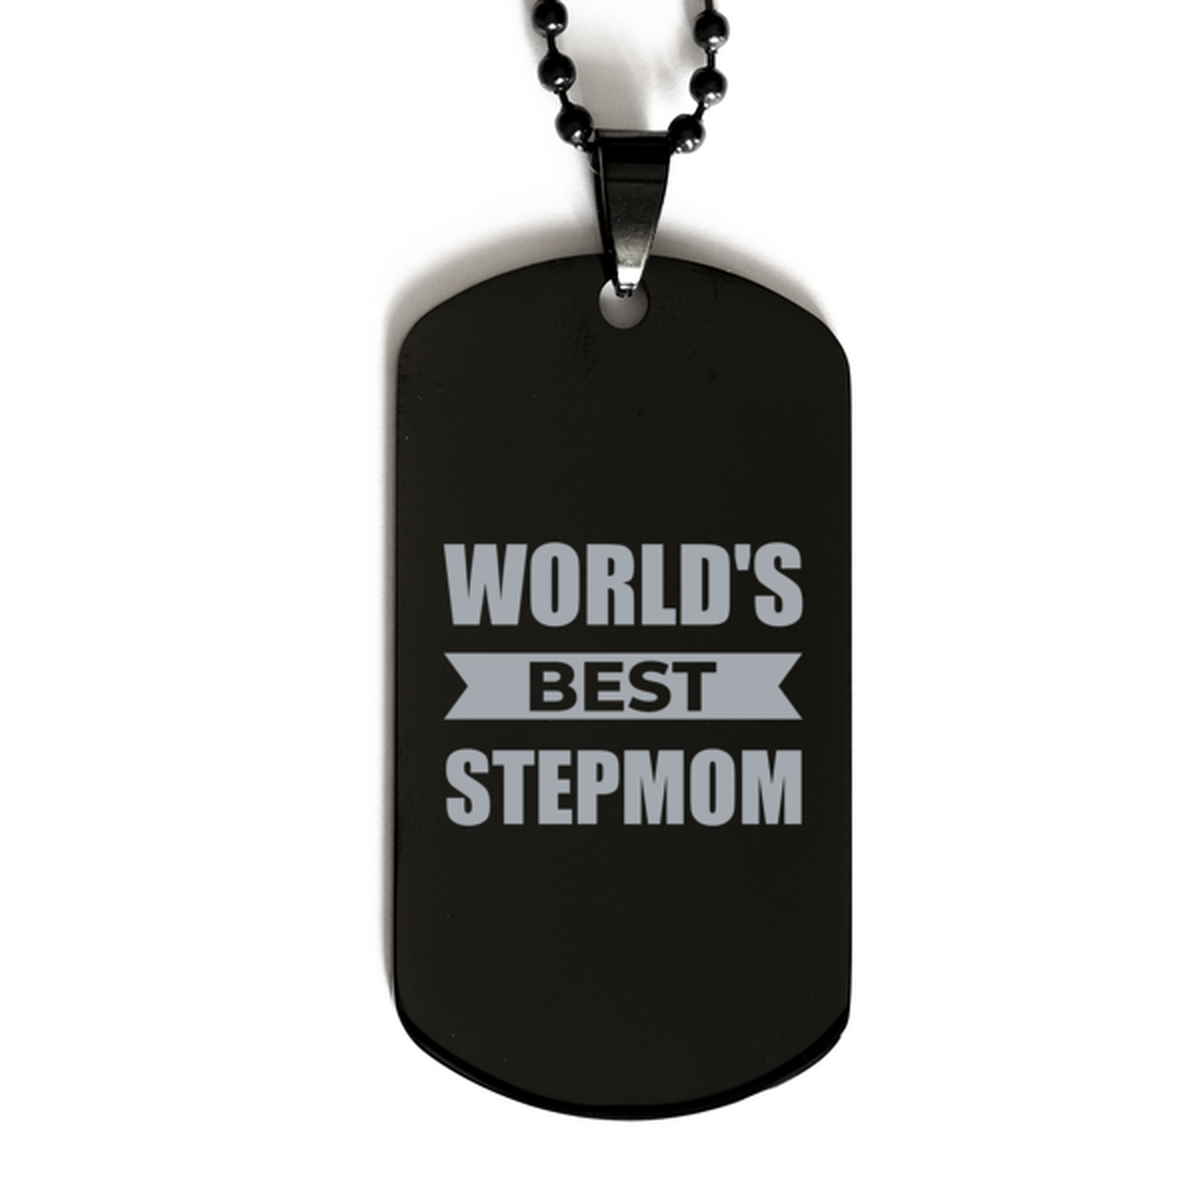 Worlds Best Stepmom Gifts, Funny Black Engraved Dog Tag For Stepmom, Birthday Presents For Women